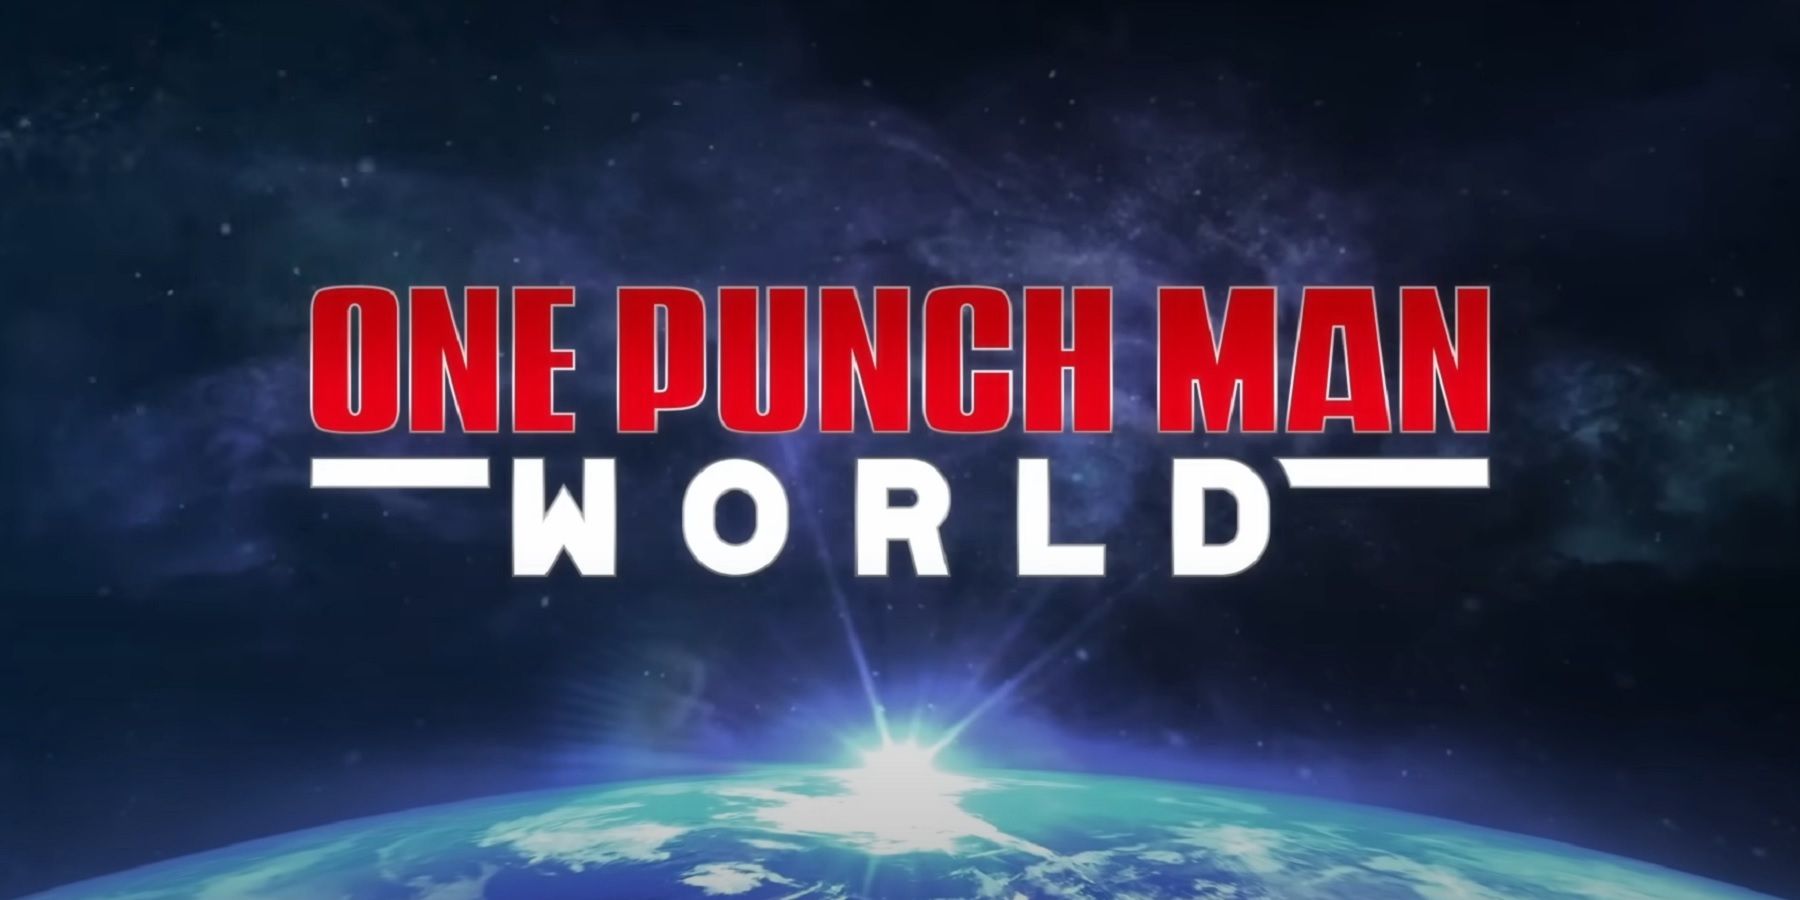 One Punch Man World